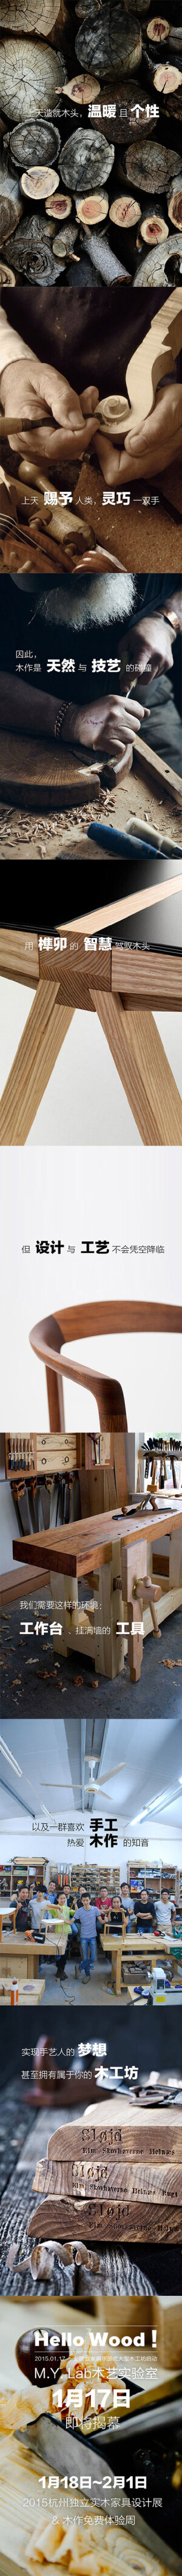 Hello Wood！1月17日，见证M.Y. Lab木艺实验室启动！1月18日~2月1日 2015杭州独立实木家具设计展。 |M.Y. Lab木艺实验室启动 &amp;amp; 2015杭州独立实木家具设计展